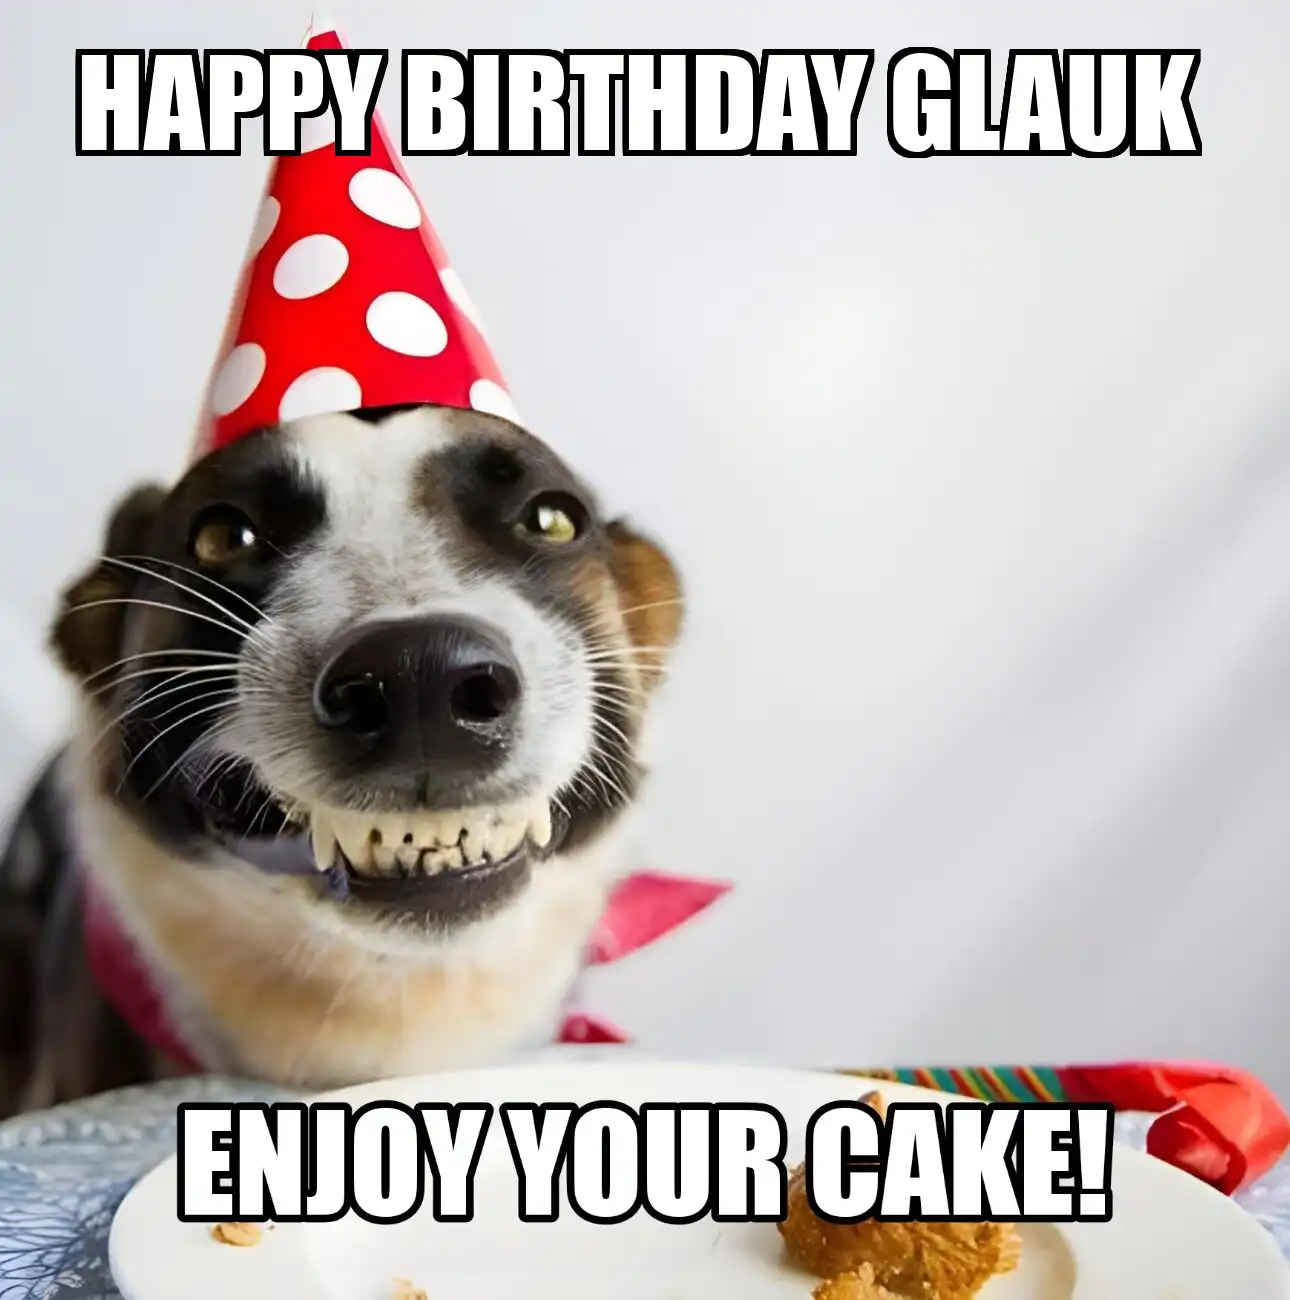 Happy Birthday Glauk Enjoy Your Cake Dog Meme